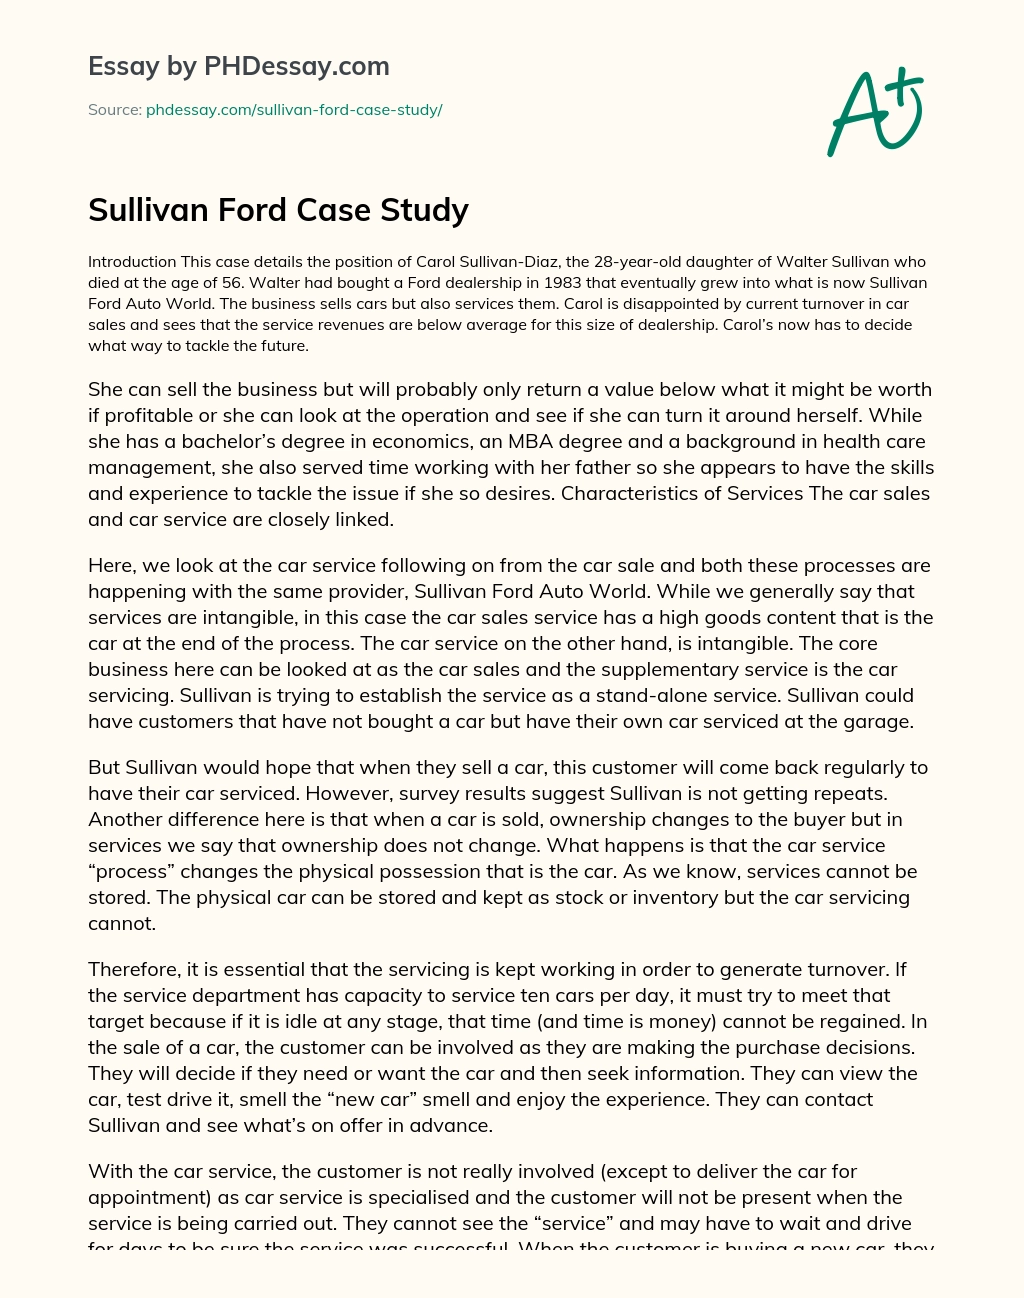 Sullivan Ford Case Study essay